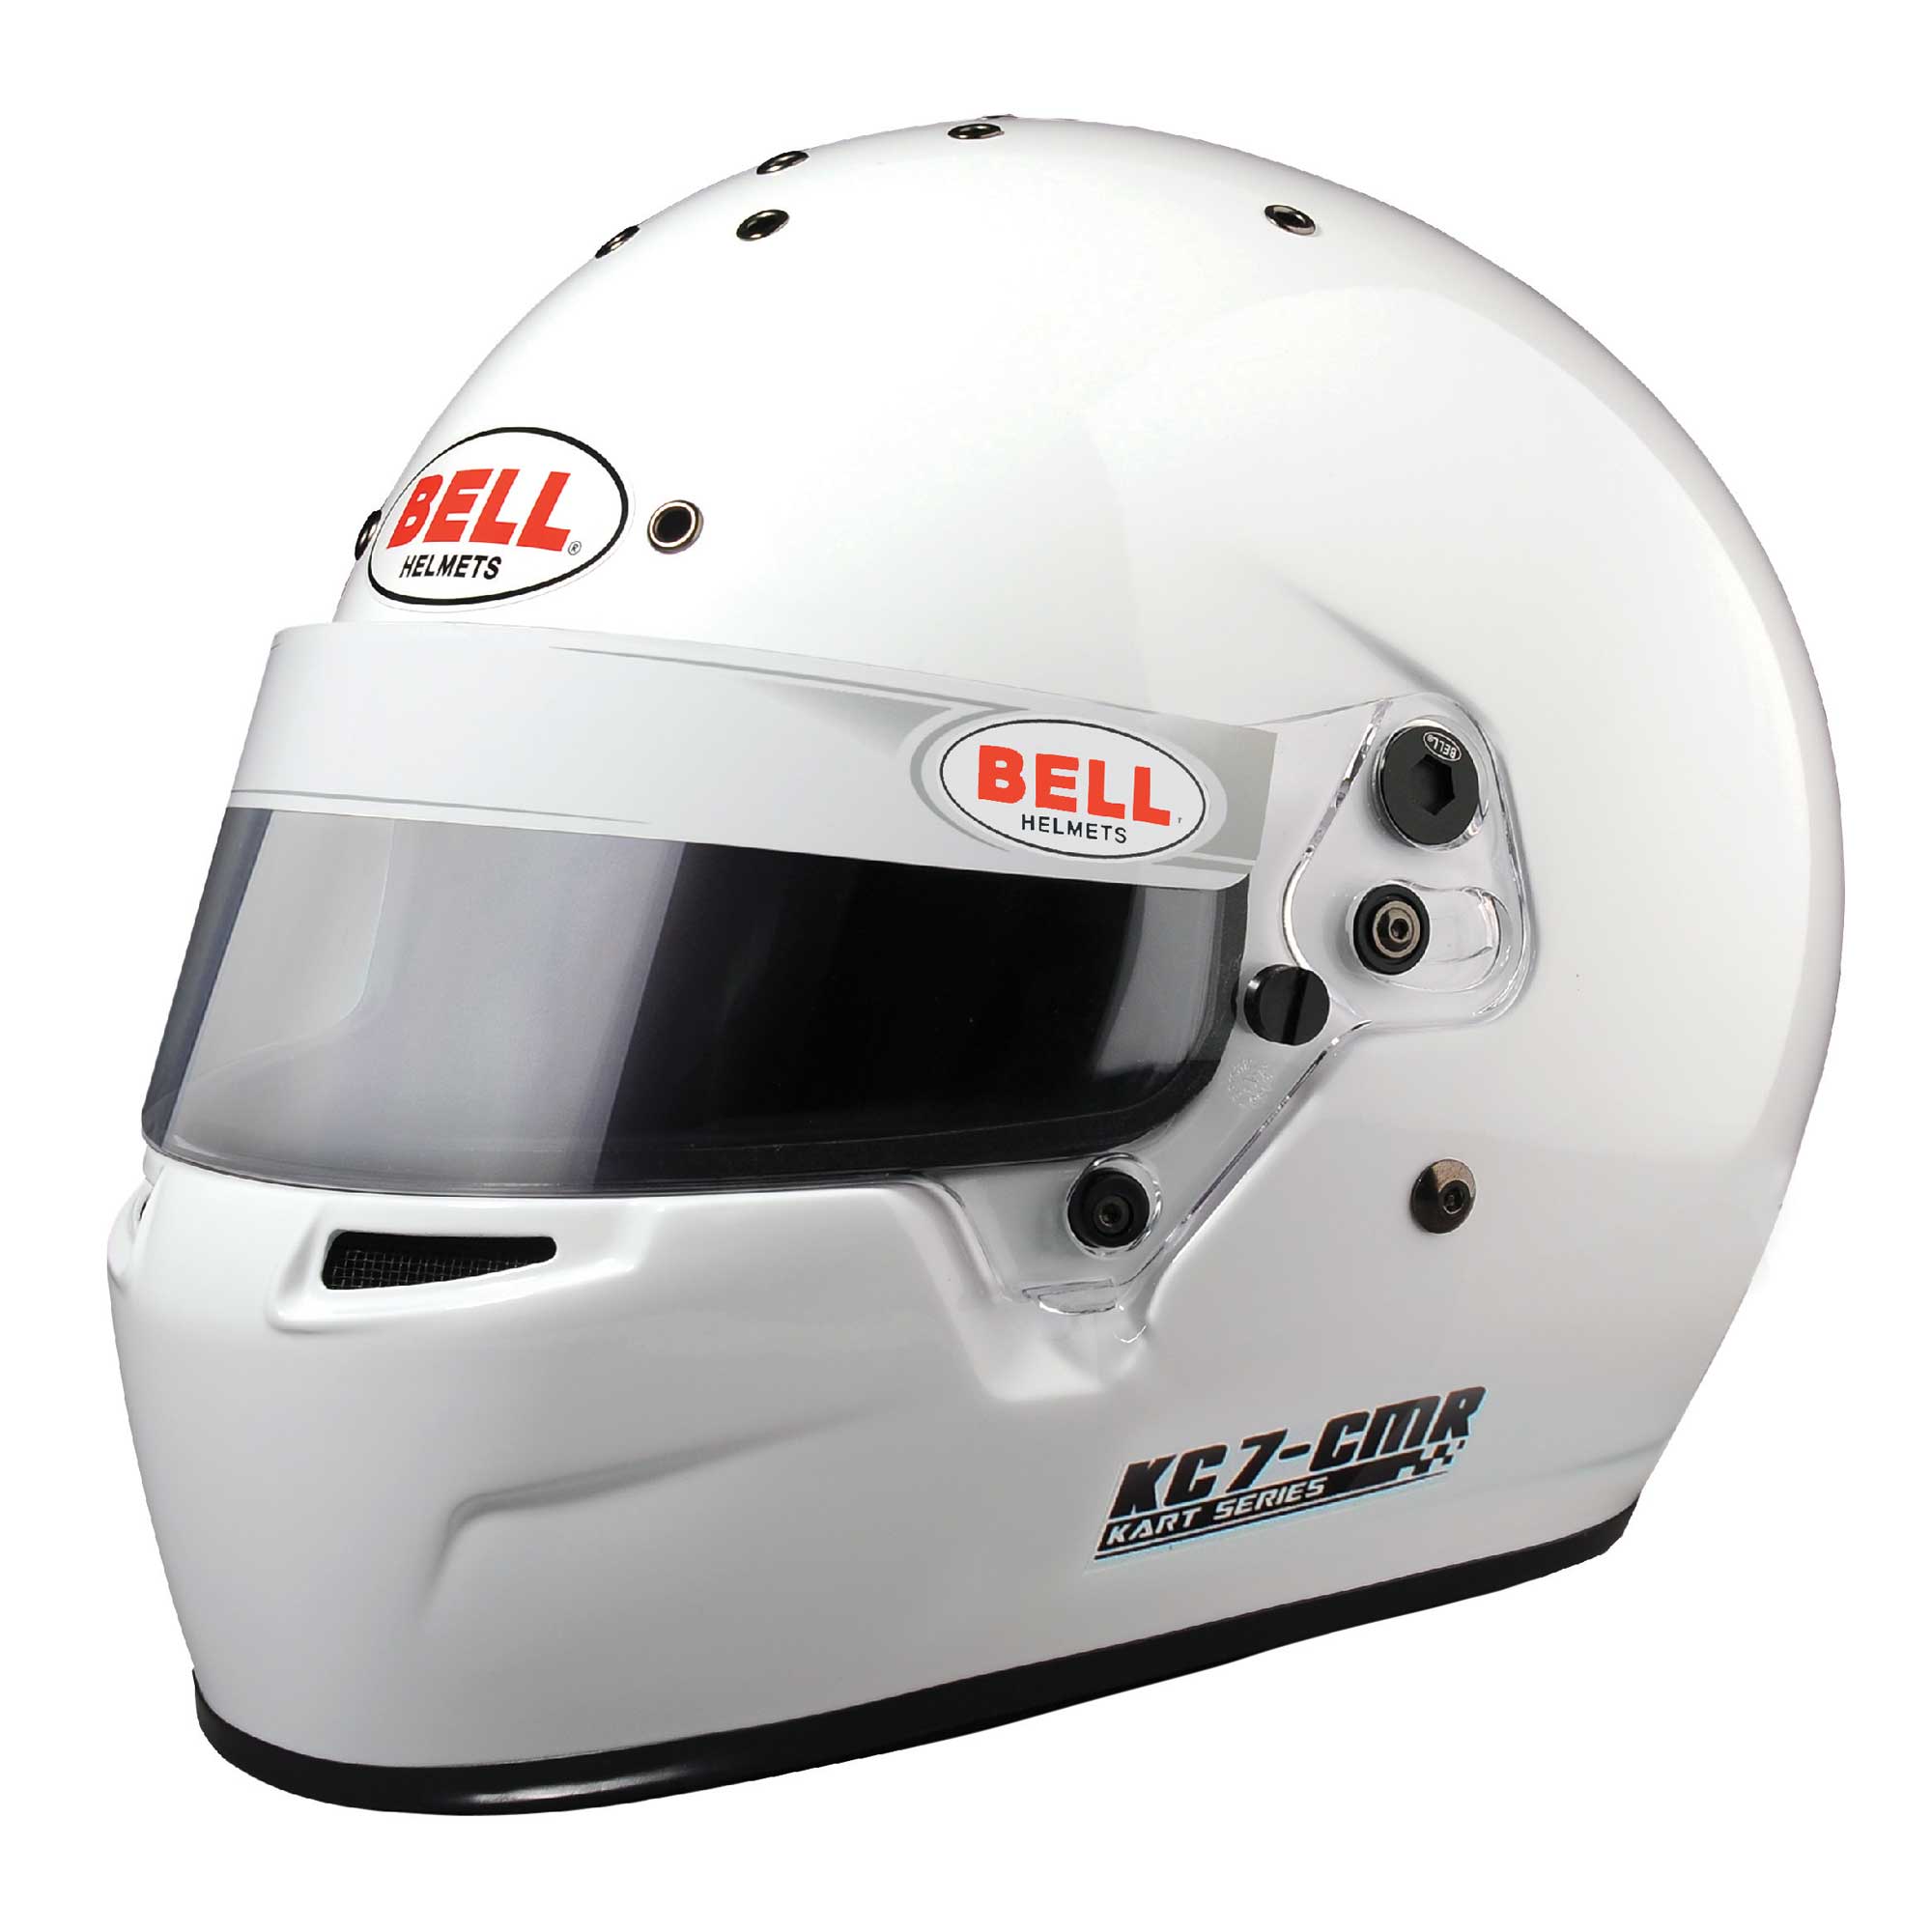 Bell KC7-CMR Go Kart Karting Race Racing Track Circuit Crash Helmet Lid -  White